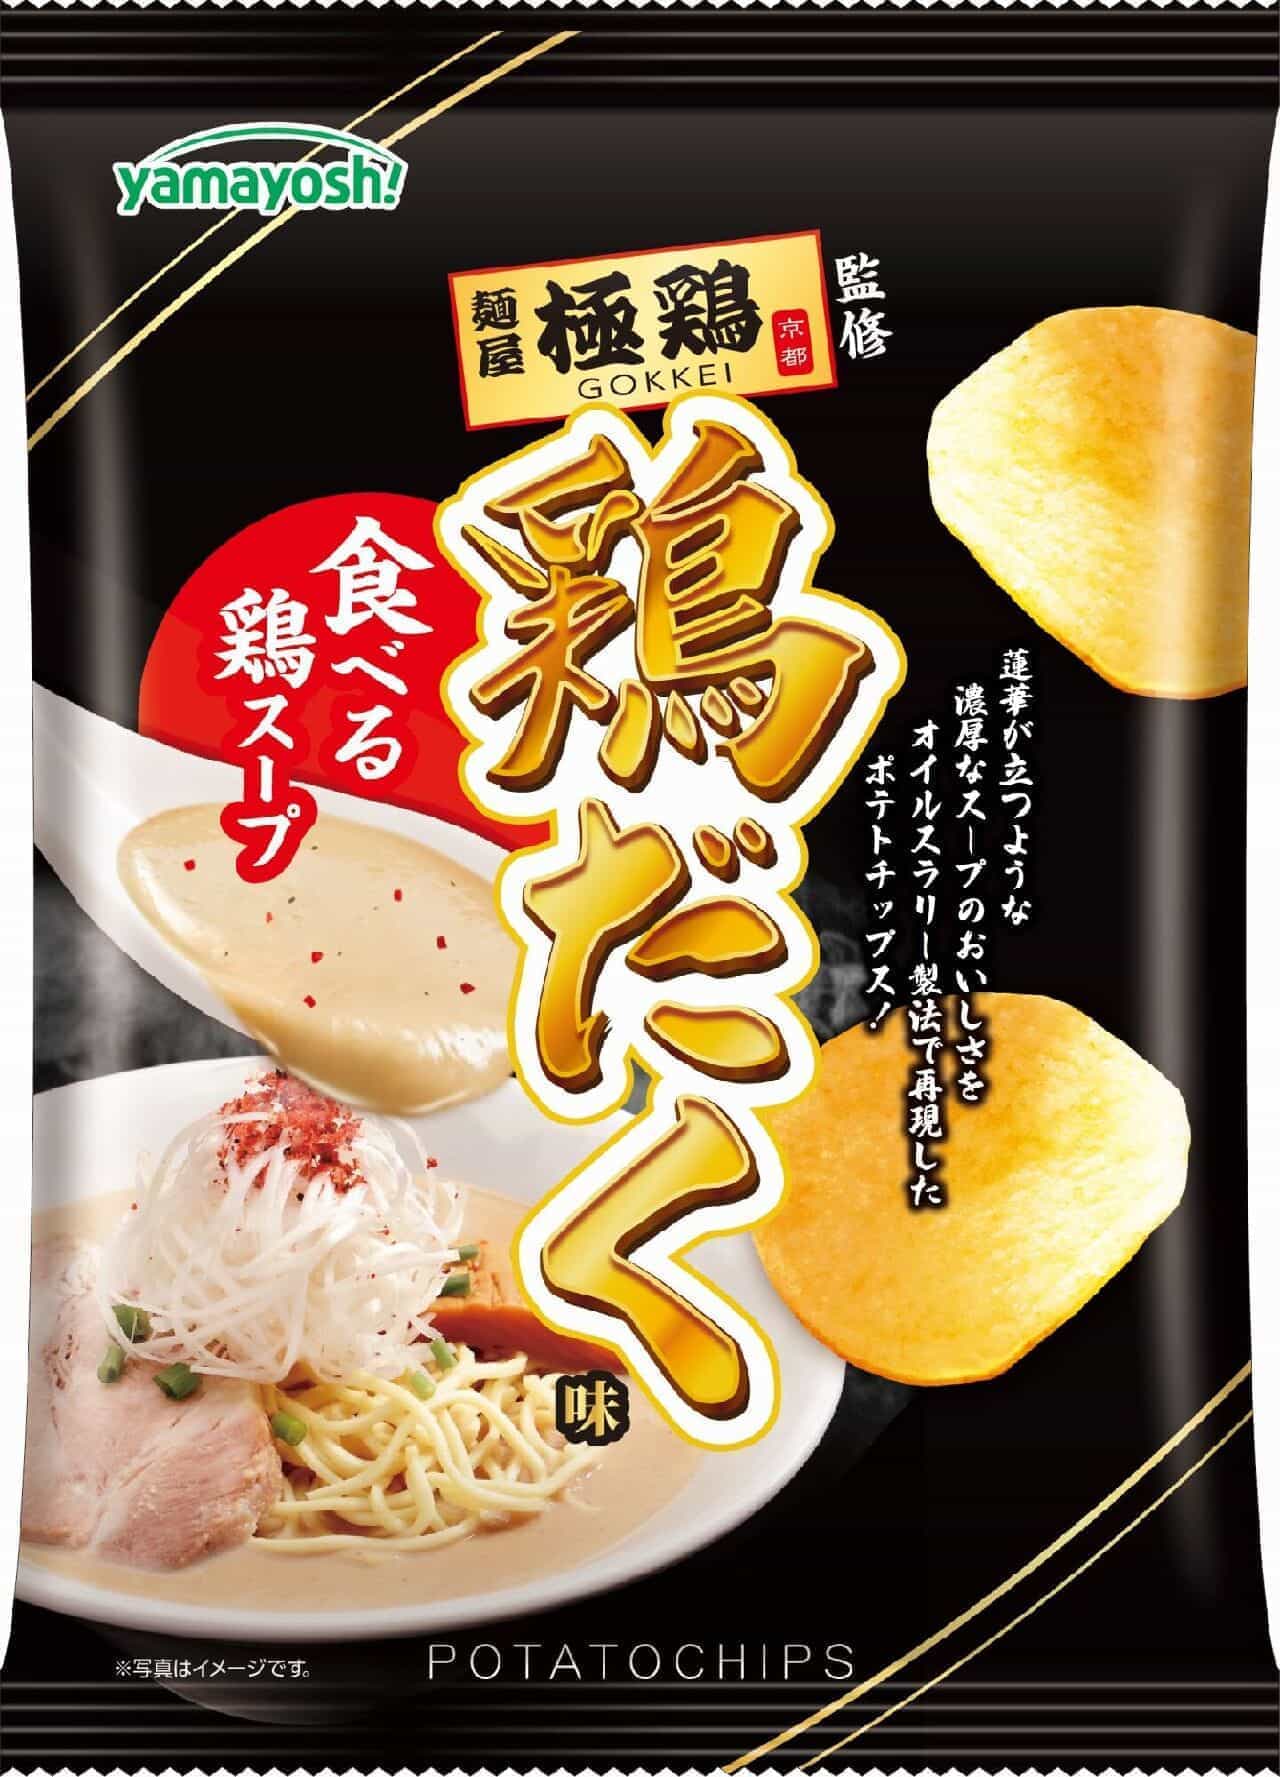 FamilyMart "Potato Chips Menya Kyokudori Chicken with Chicken Flavor".